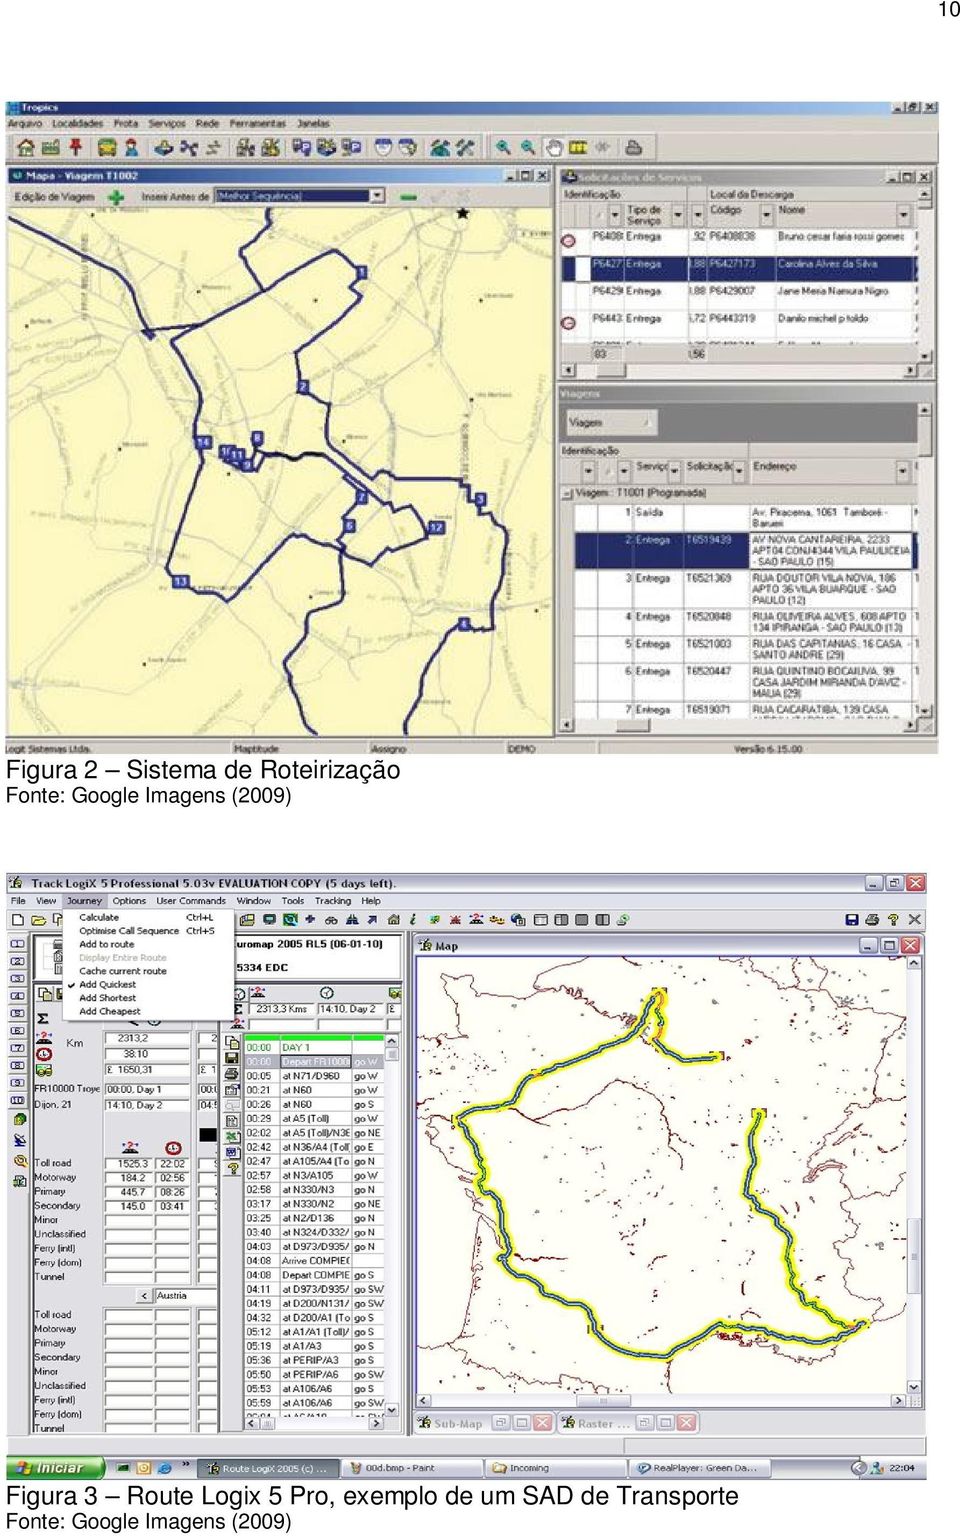 Route Logix 5 Pro, exemplo de um SAD